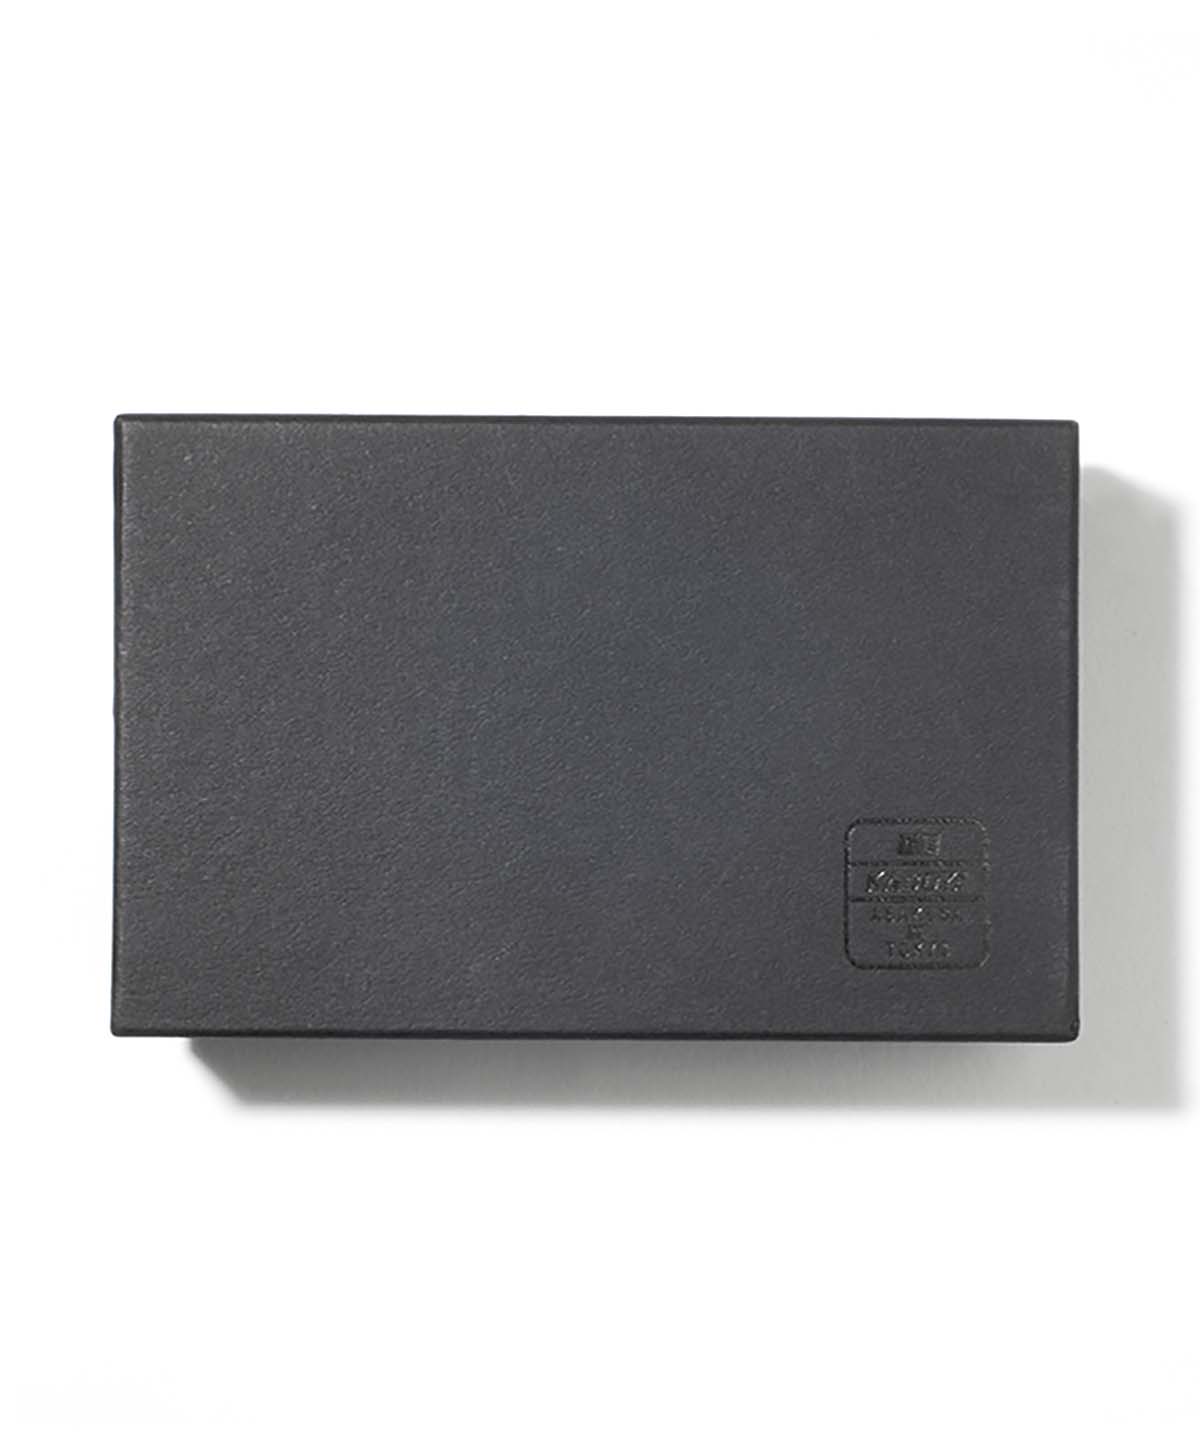 Caso -chave carteira compacta / preto